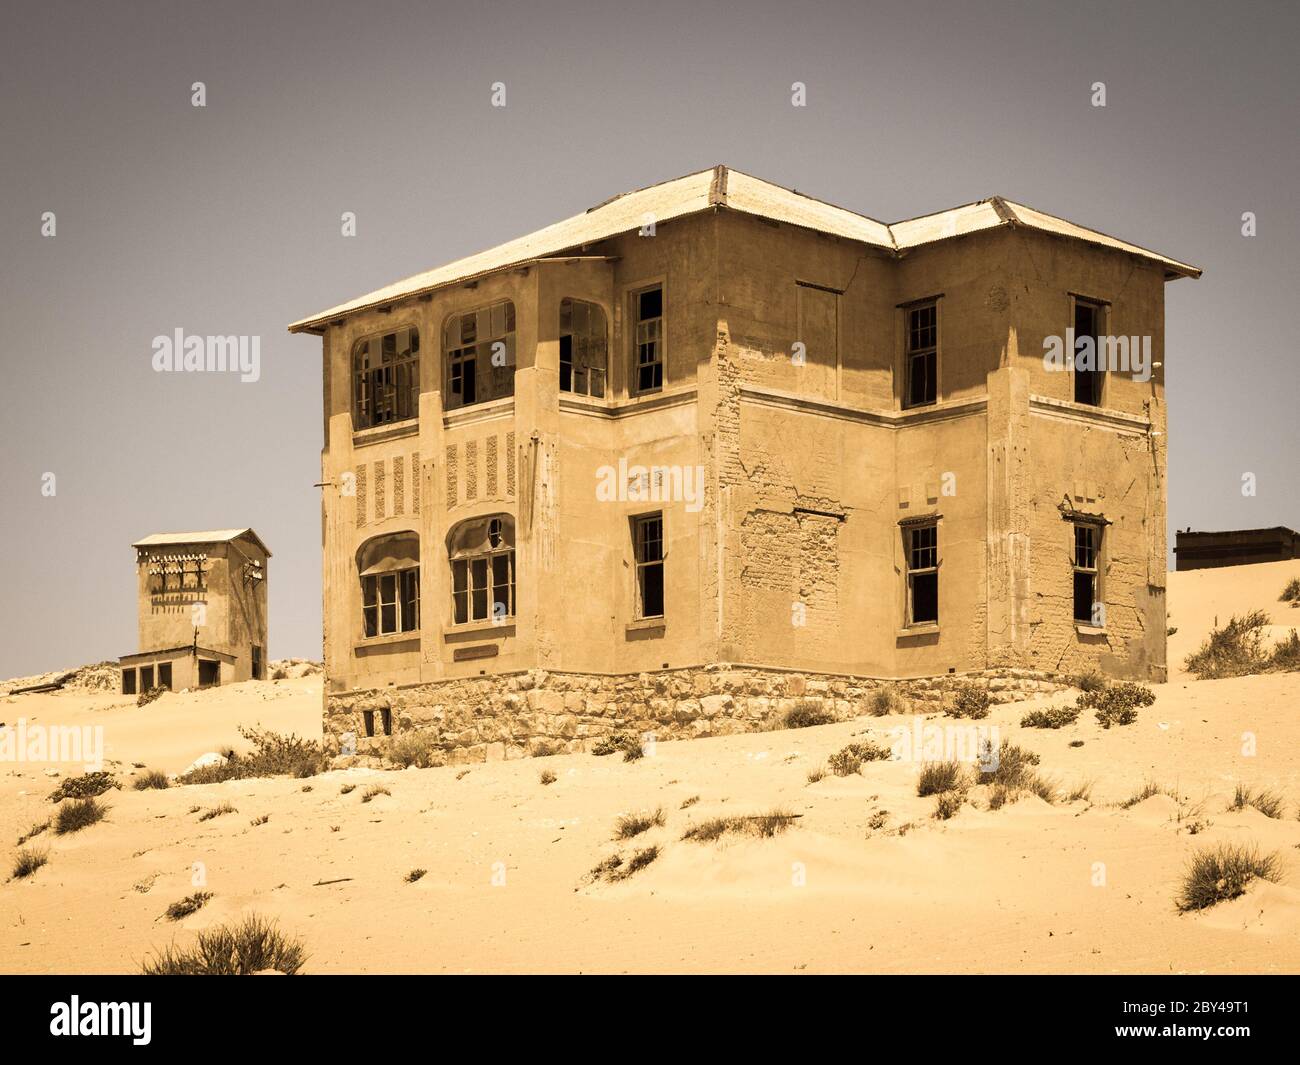 Ghost buildings of old diamond mining town Kolmanskop near Luderitz in Namibia. Abandoned house ruins sunken in the sand dunes of Namib Desert. Vintage toning photography. Stock Photo